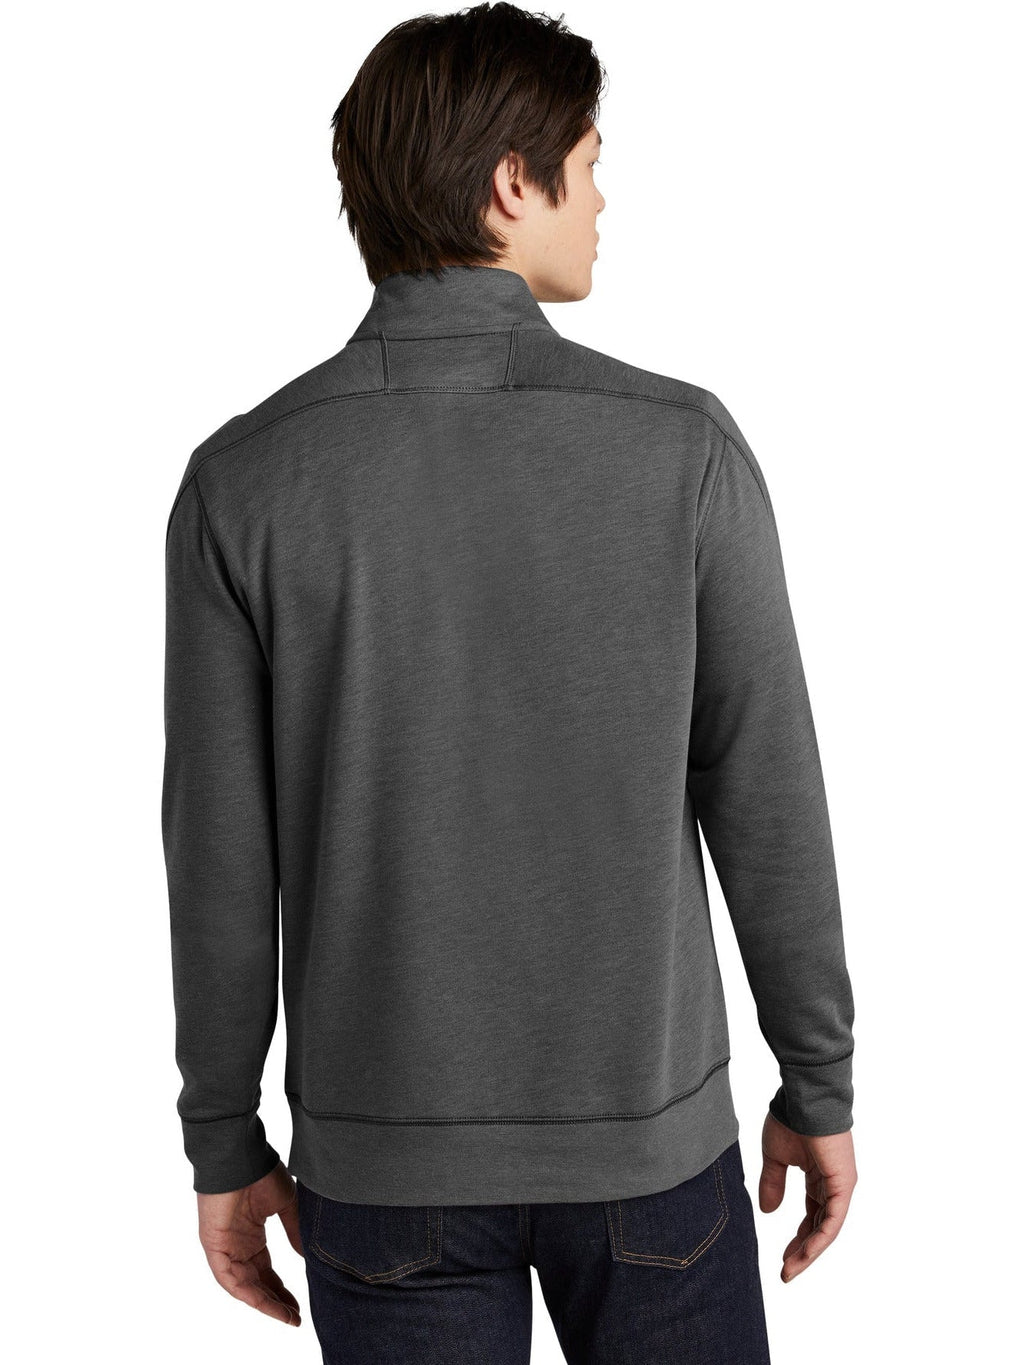 New Era Tri-Blend Fleece 1/4-Zip Pullover